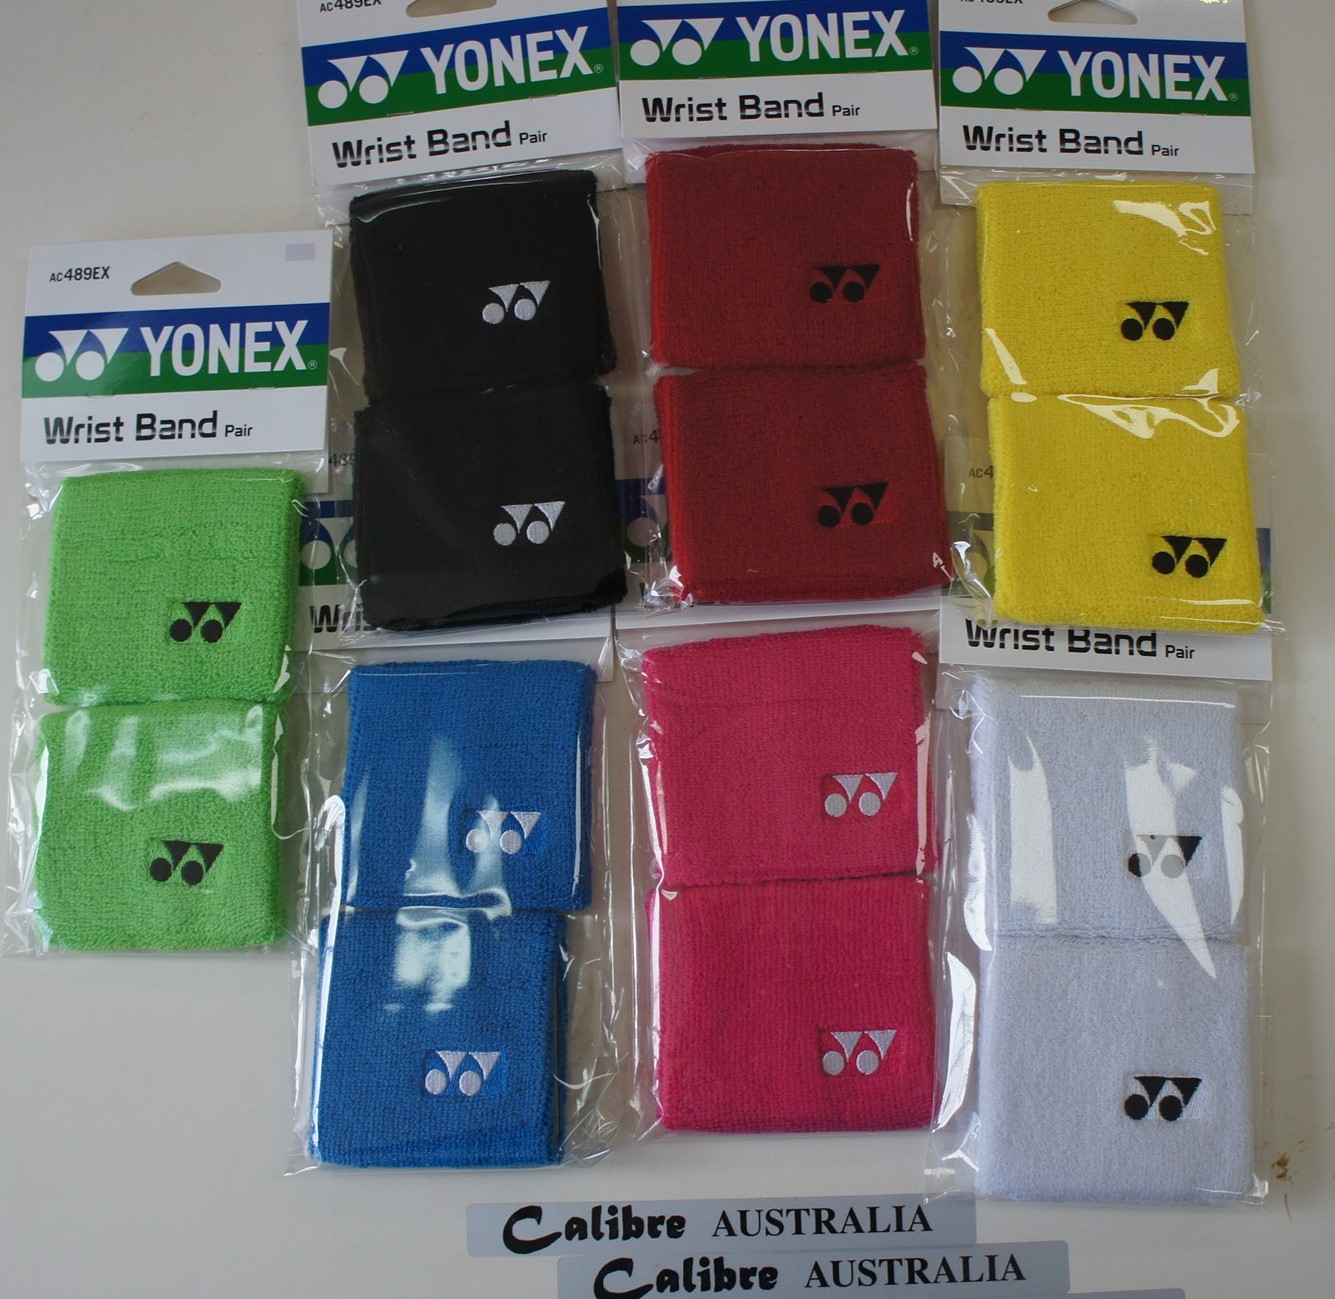 Taiwan Medium Details about   One Pair YONEX Elastic Compression Calf Socks Sleeves 17901-007 